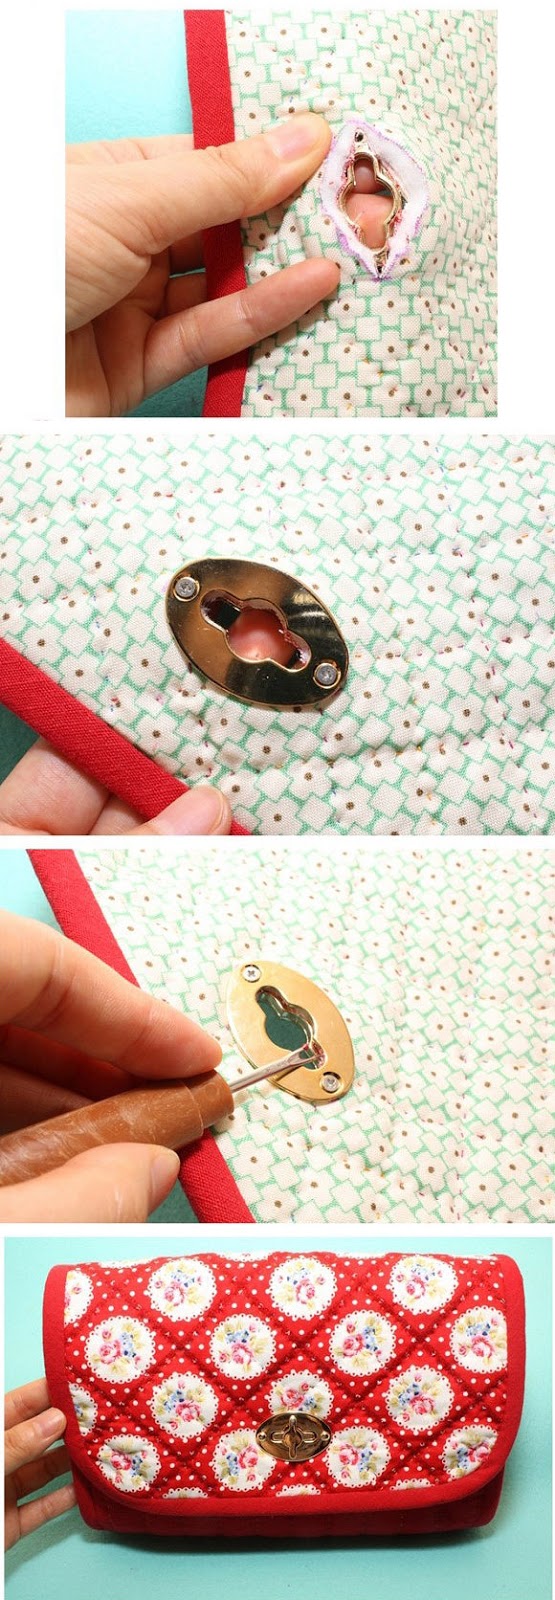 How to sew a Handbag with Turn Locks. Sewing Pattern & DIY Picture Tutorial.  Сумка-клатч с поворотной застежкой. Инструкция по шитью.